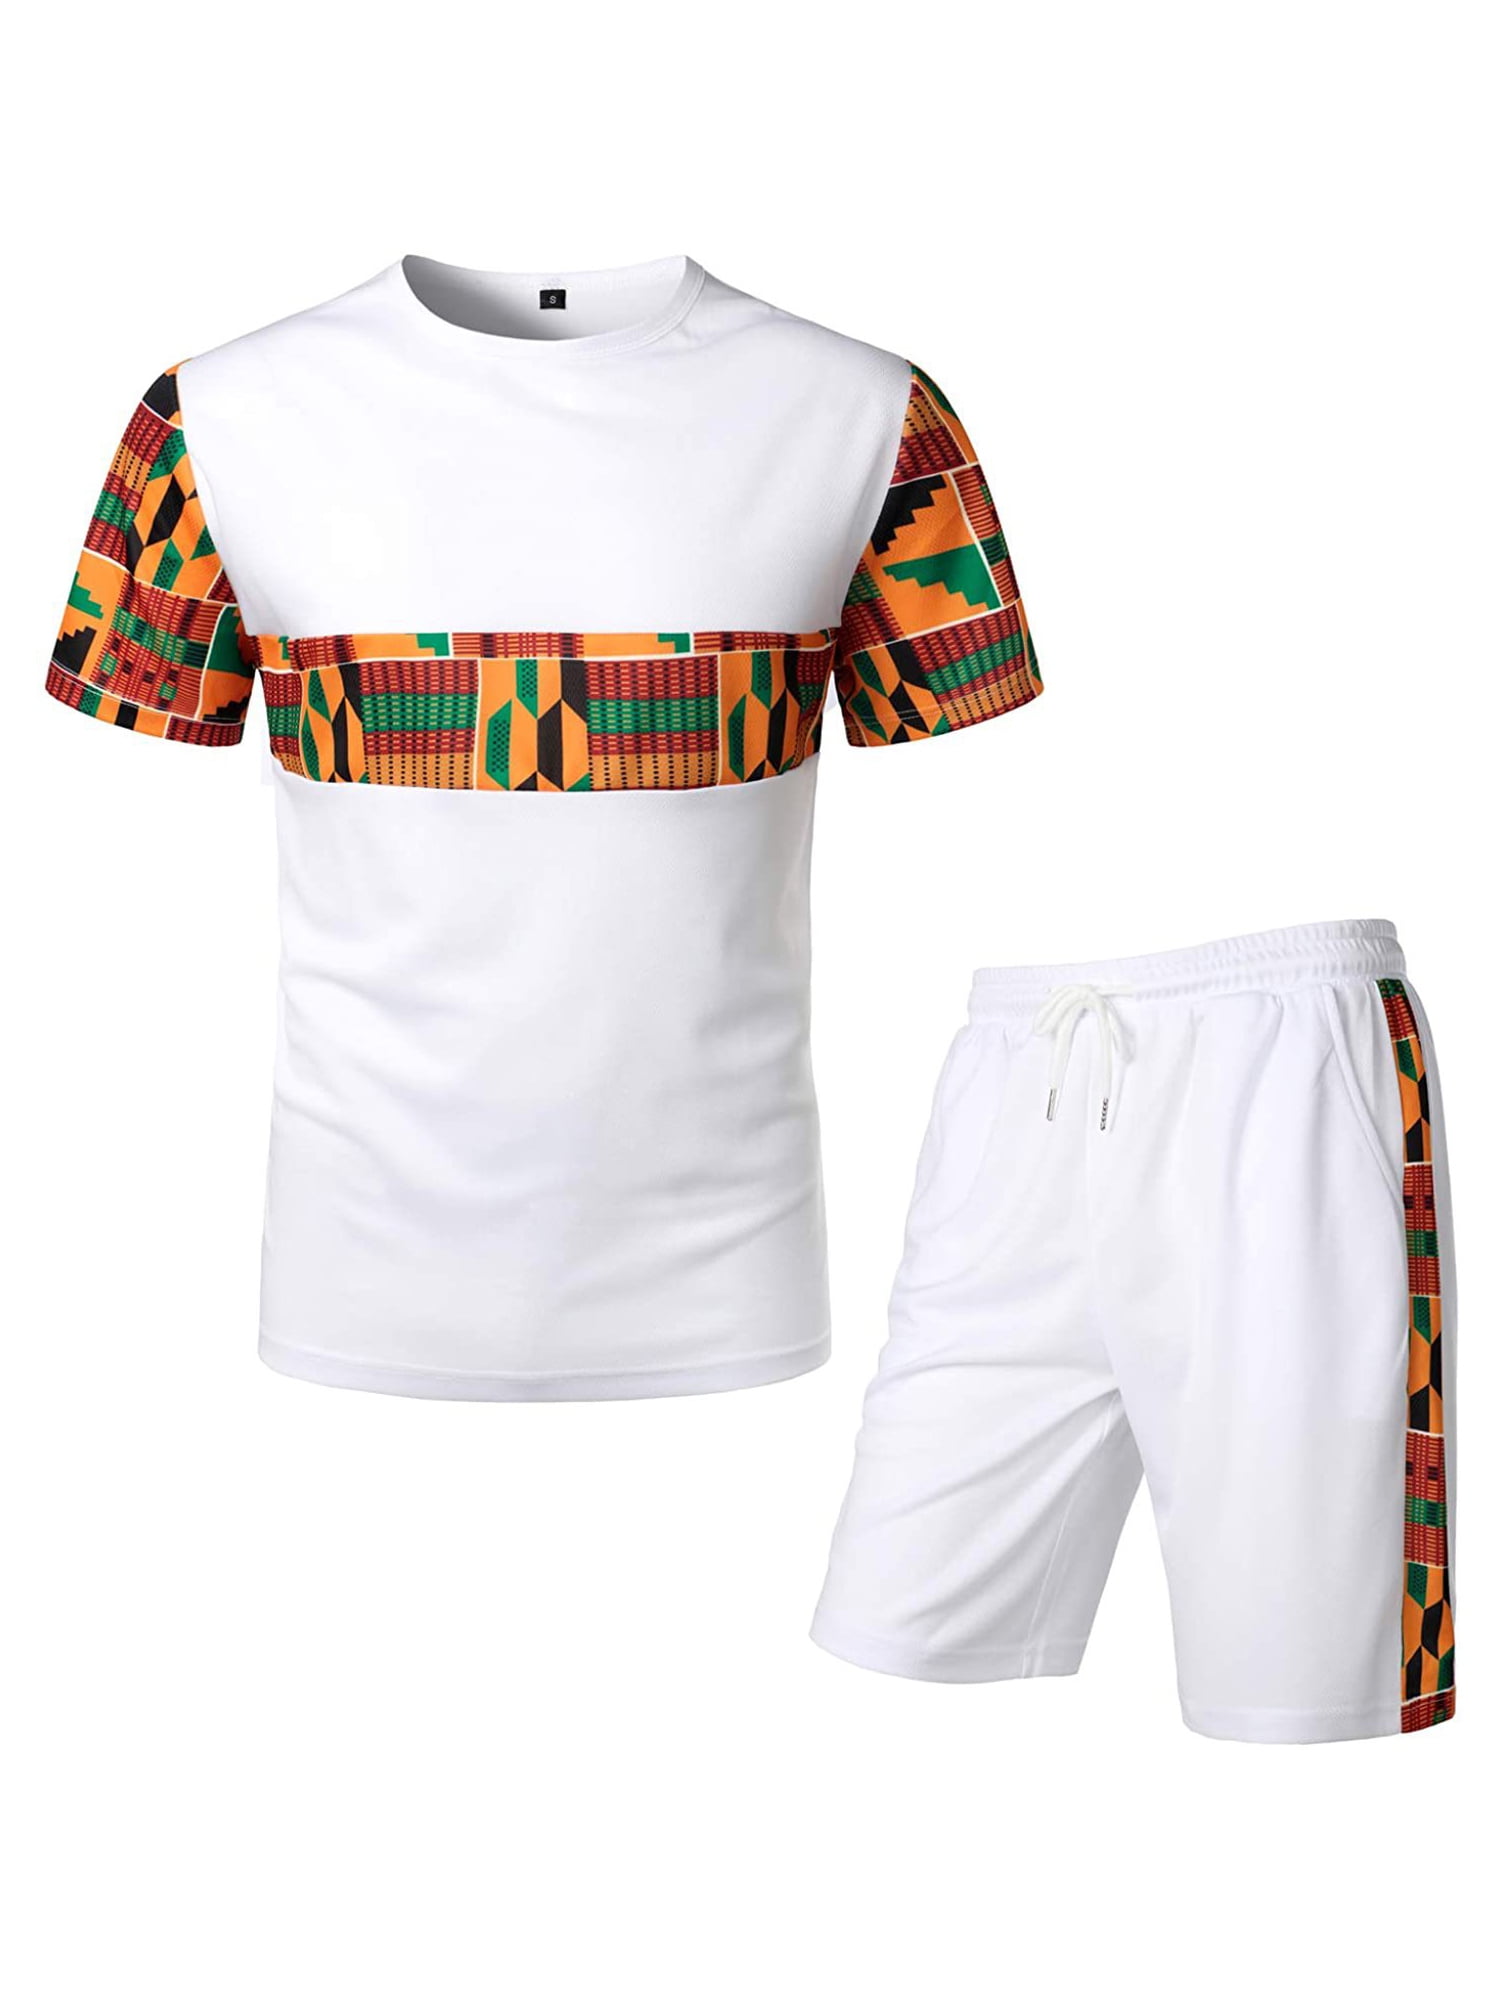 Details about   Customizable Printing Men Women Basketball Jersey Sport Set shirts and shorts 